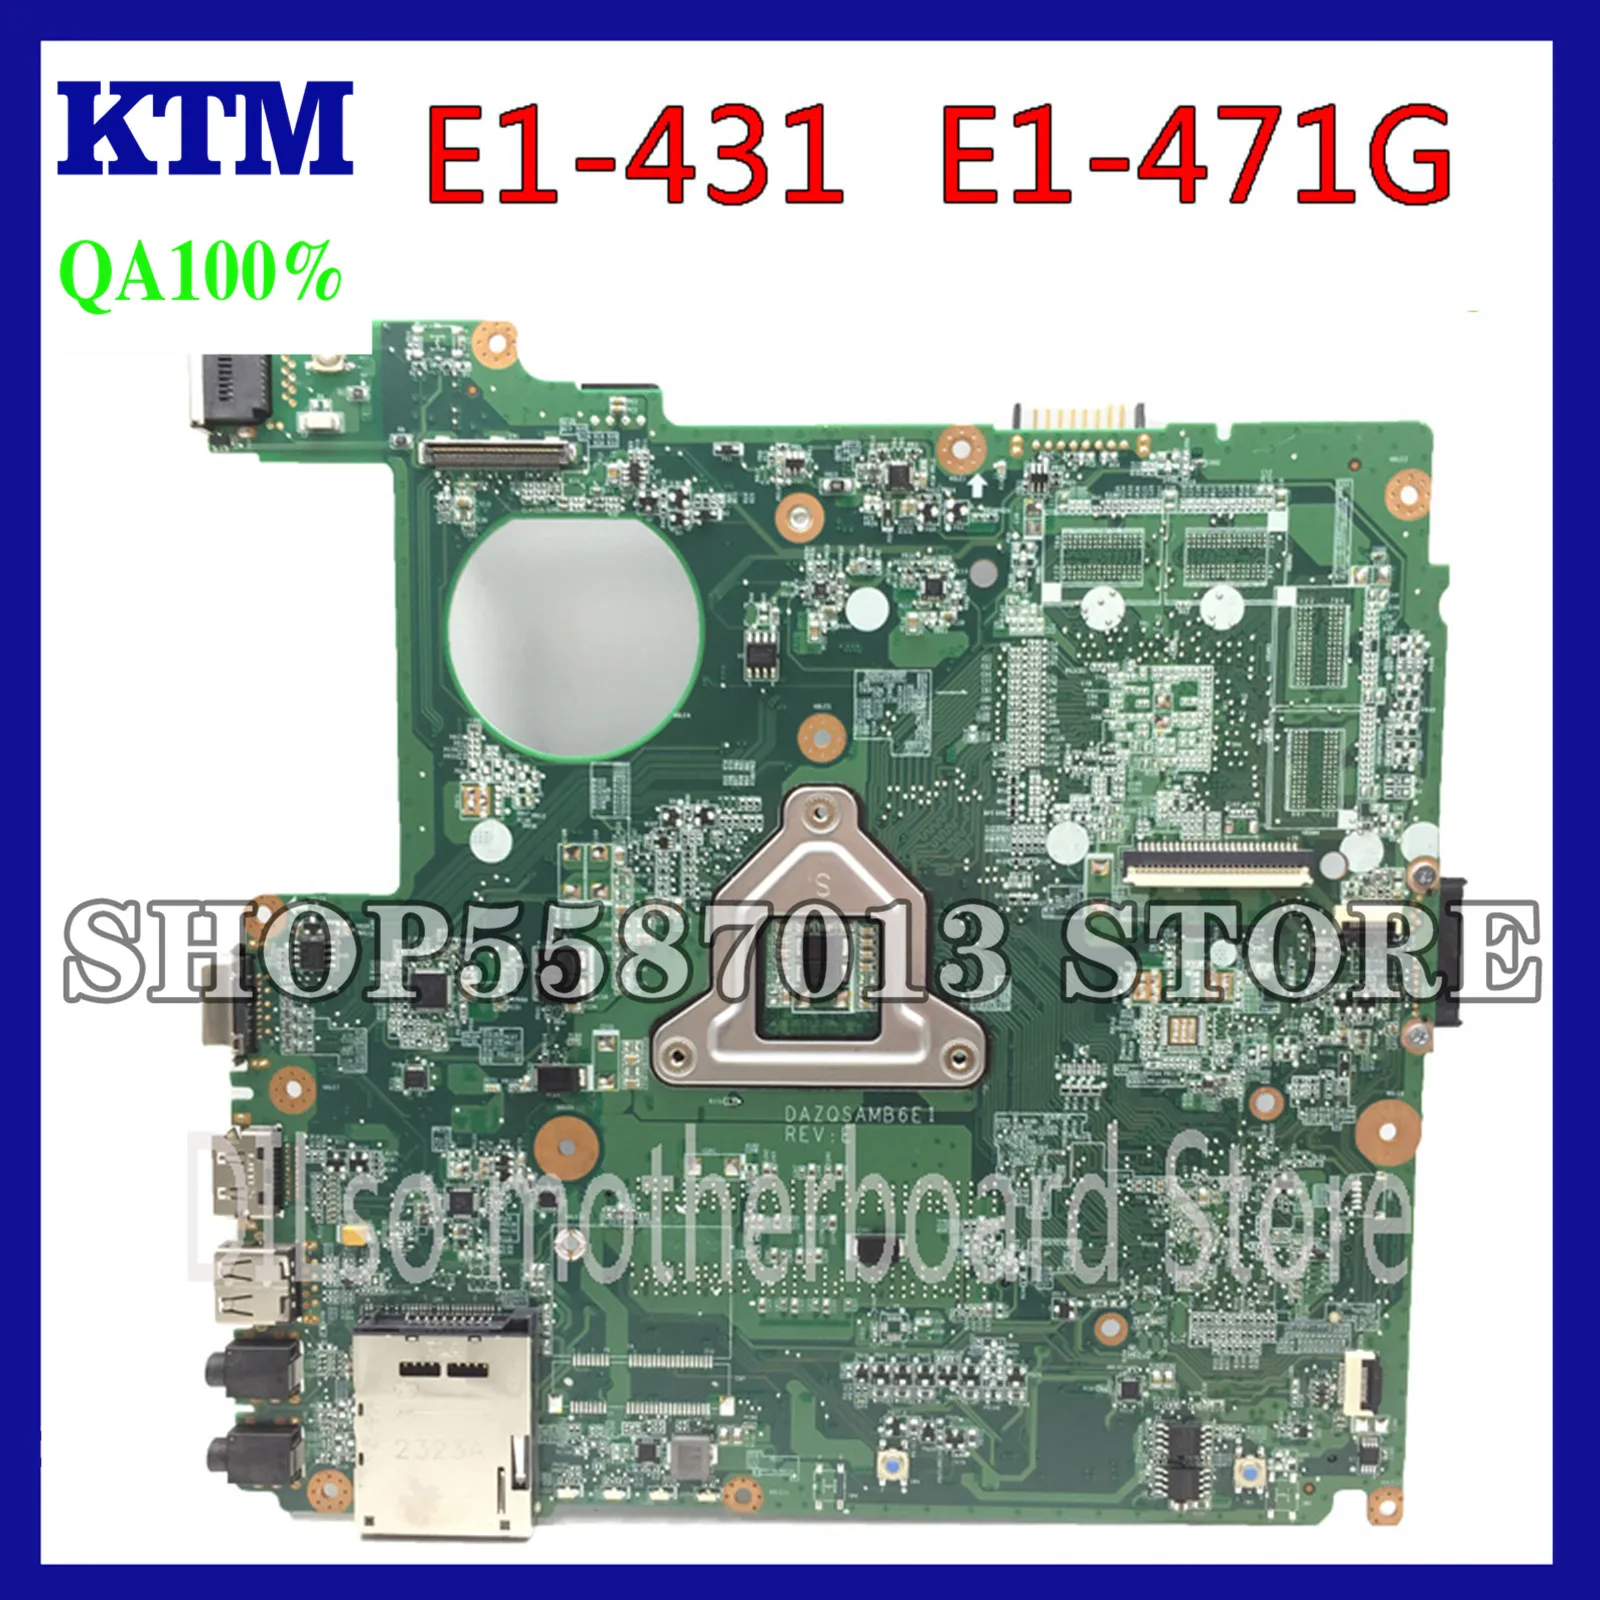 

KEFU E1-471G DAZQSAMB6E1 Motherboard For ACER Aspire E1-431 E1-471 V3-471 Laptop Motherboard HM77 original Test Motherboard